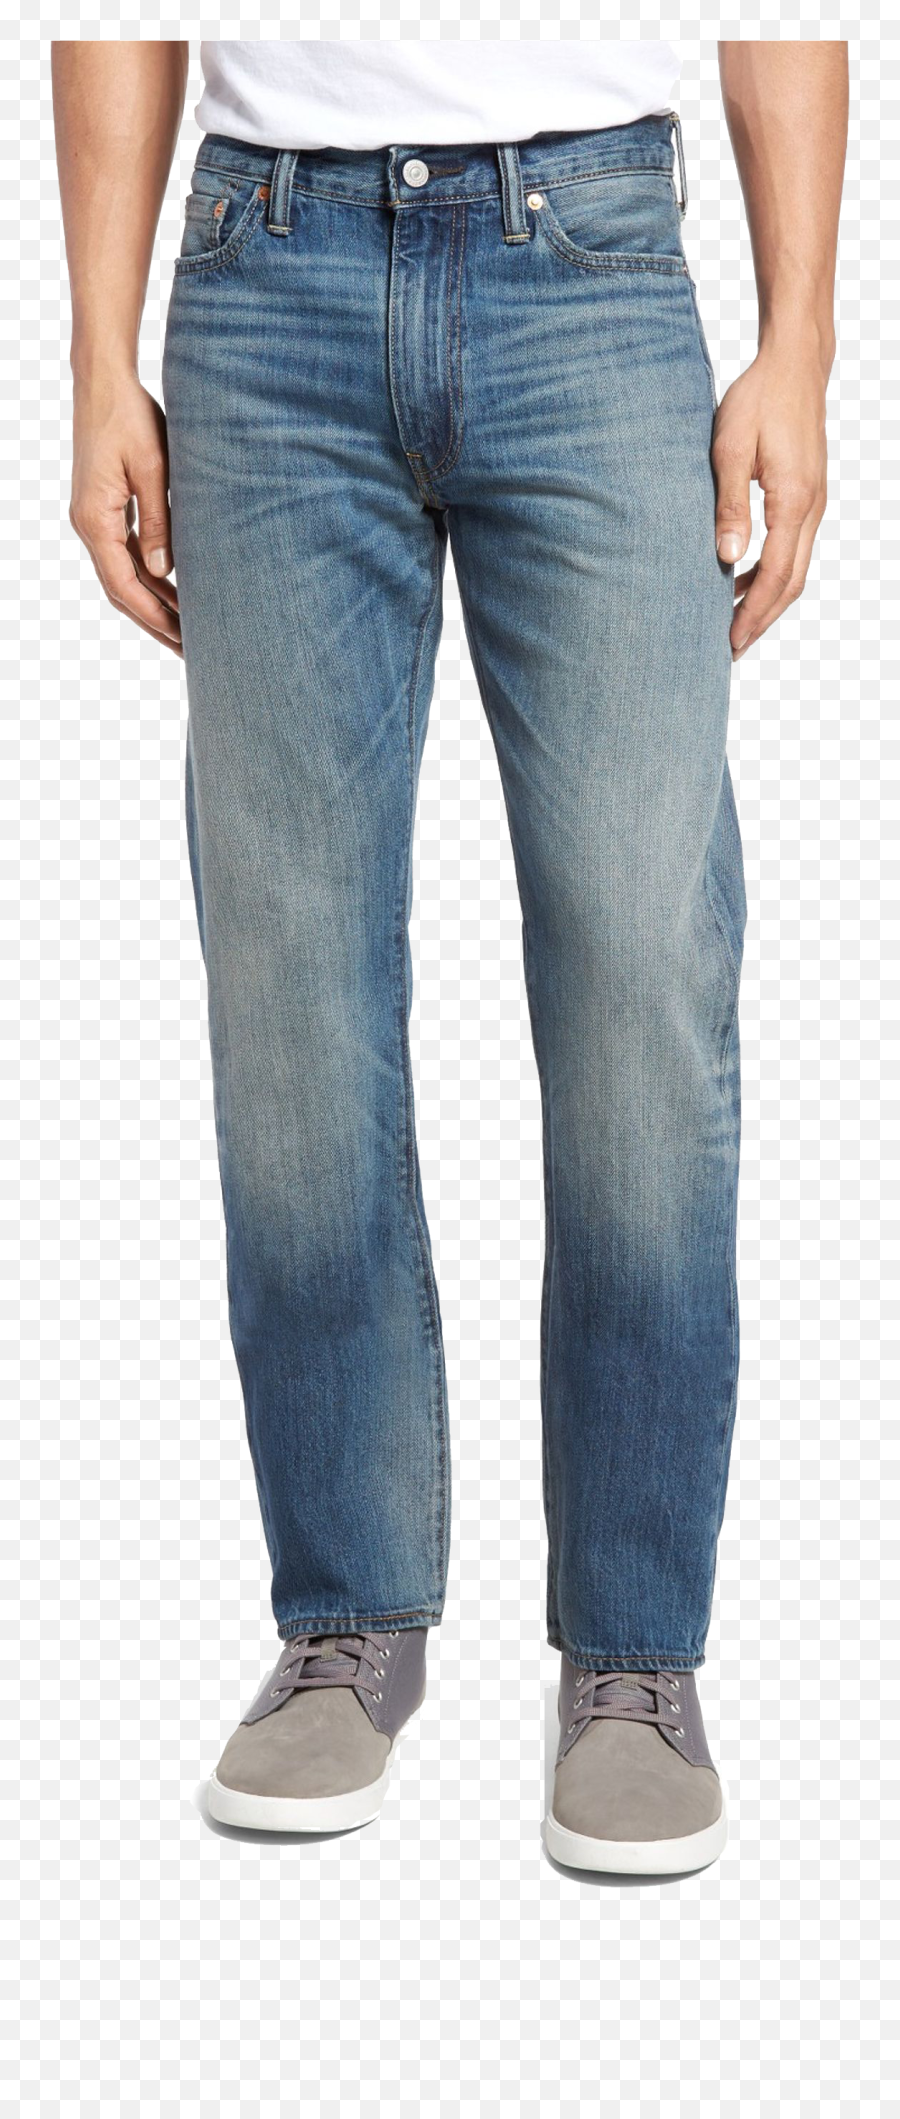 Download Levis Jeans Men 2018 Png Image With No Background Transparent